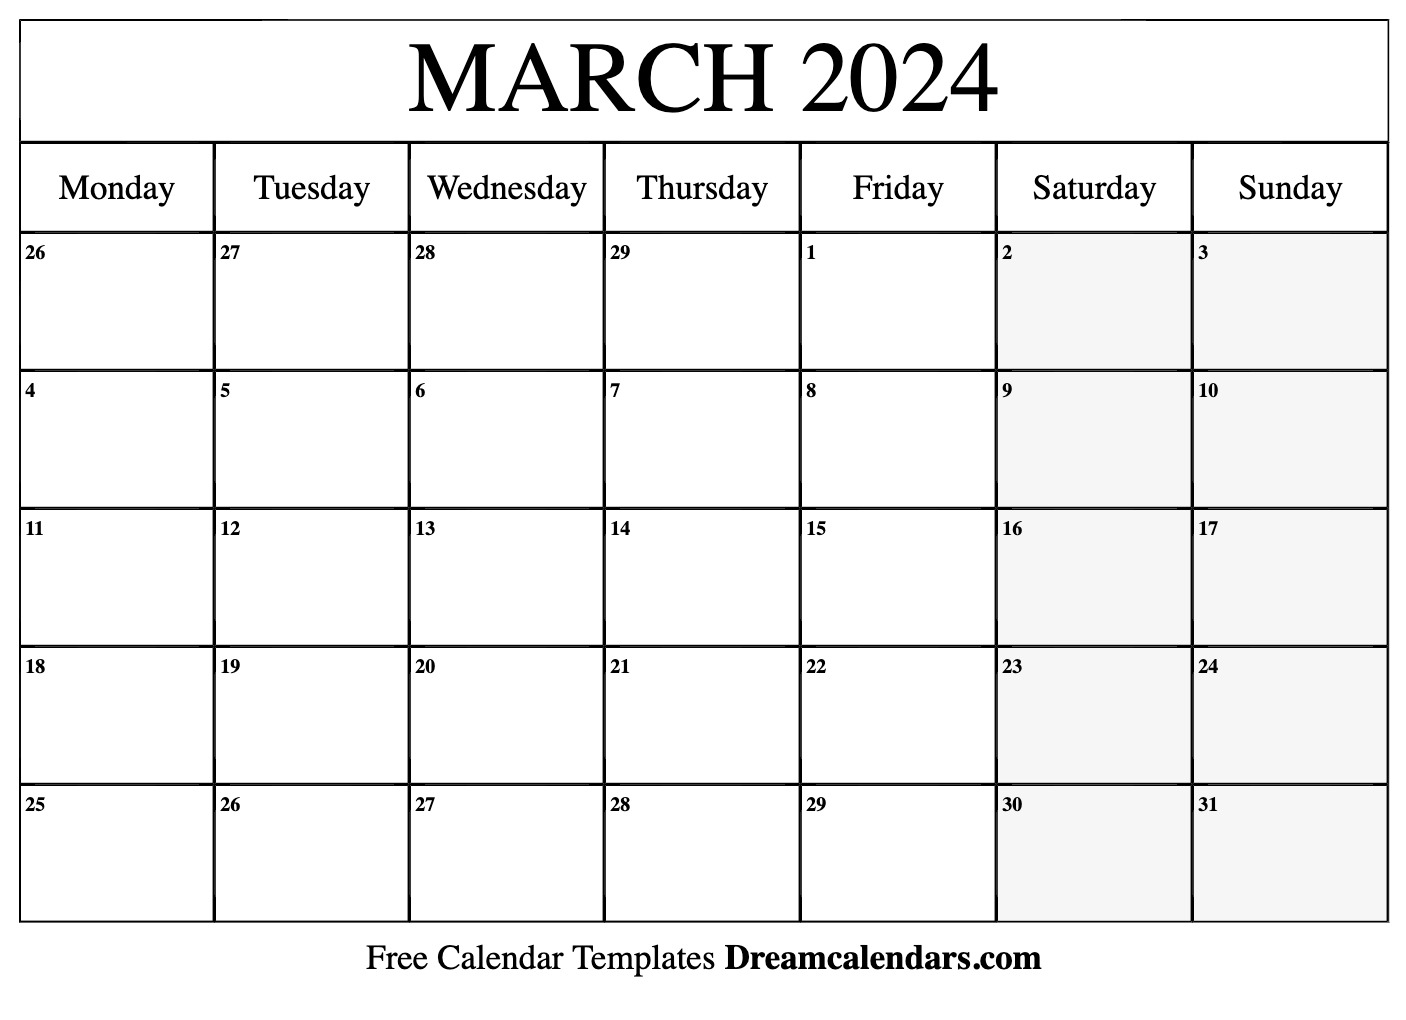 March 2024 Calendar Rashifal Latest Top The Best Famous July Calendar 2024 Printable